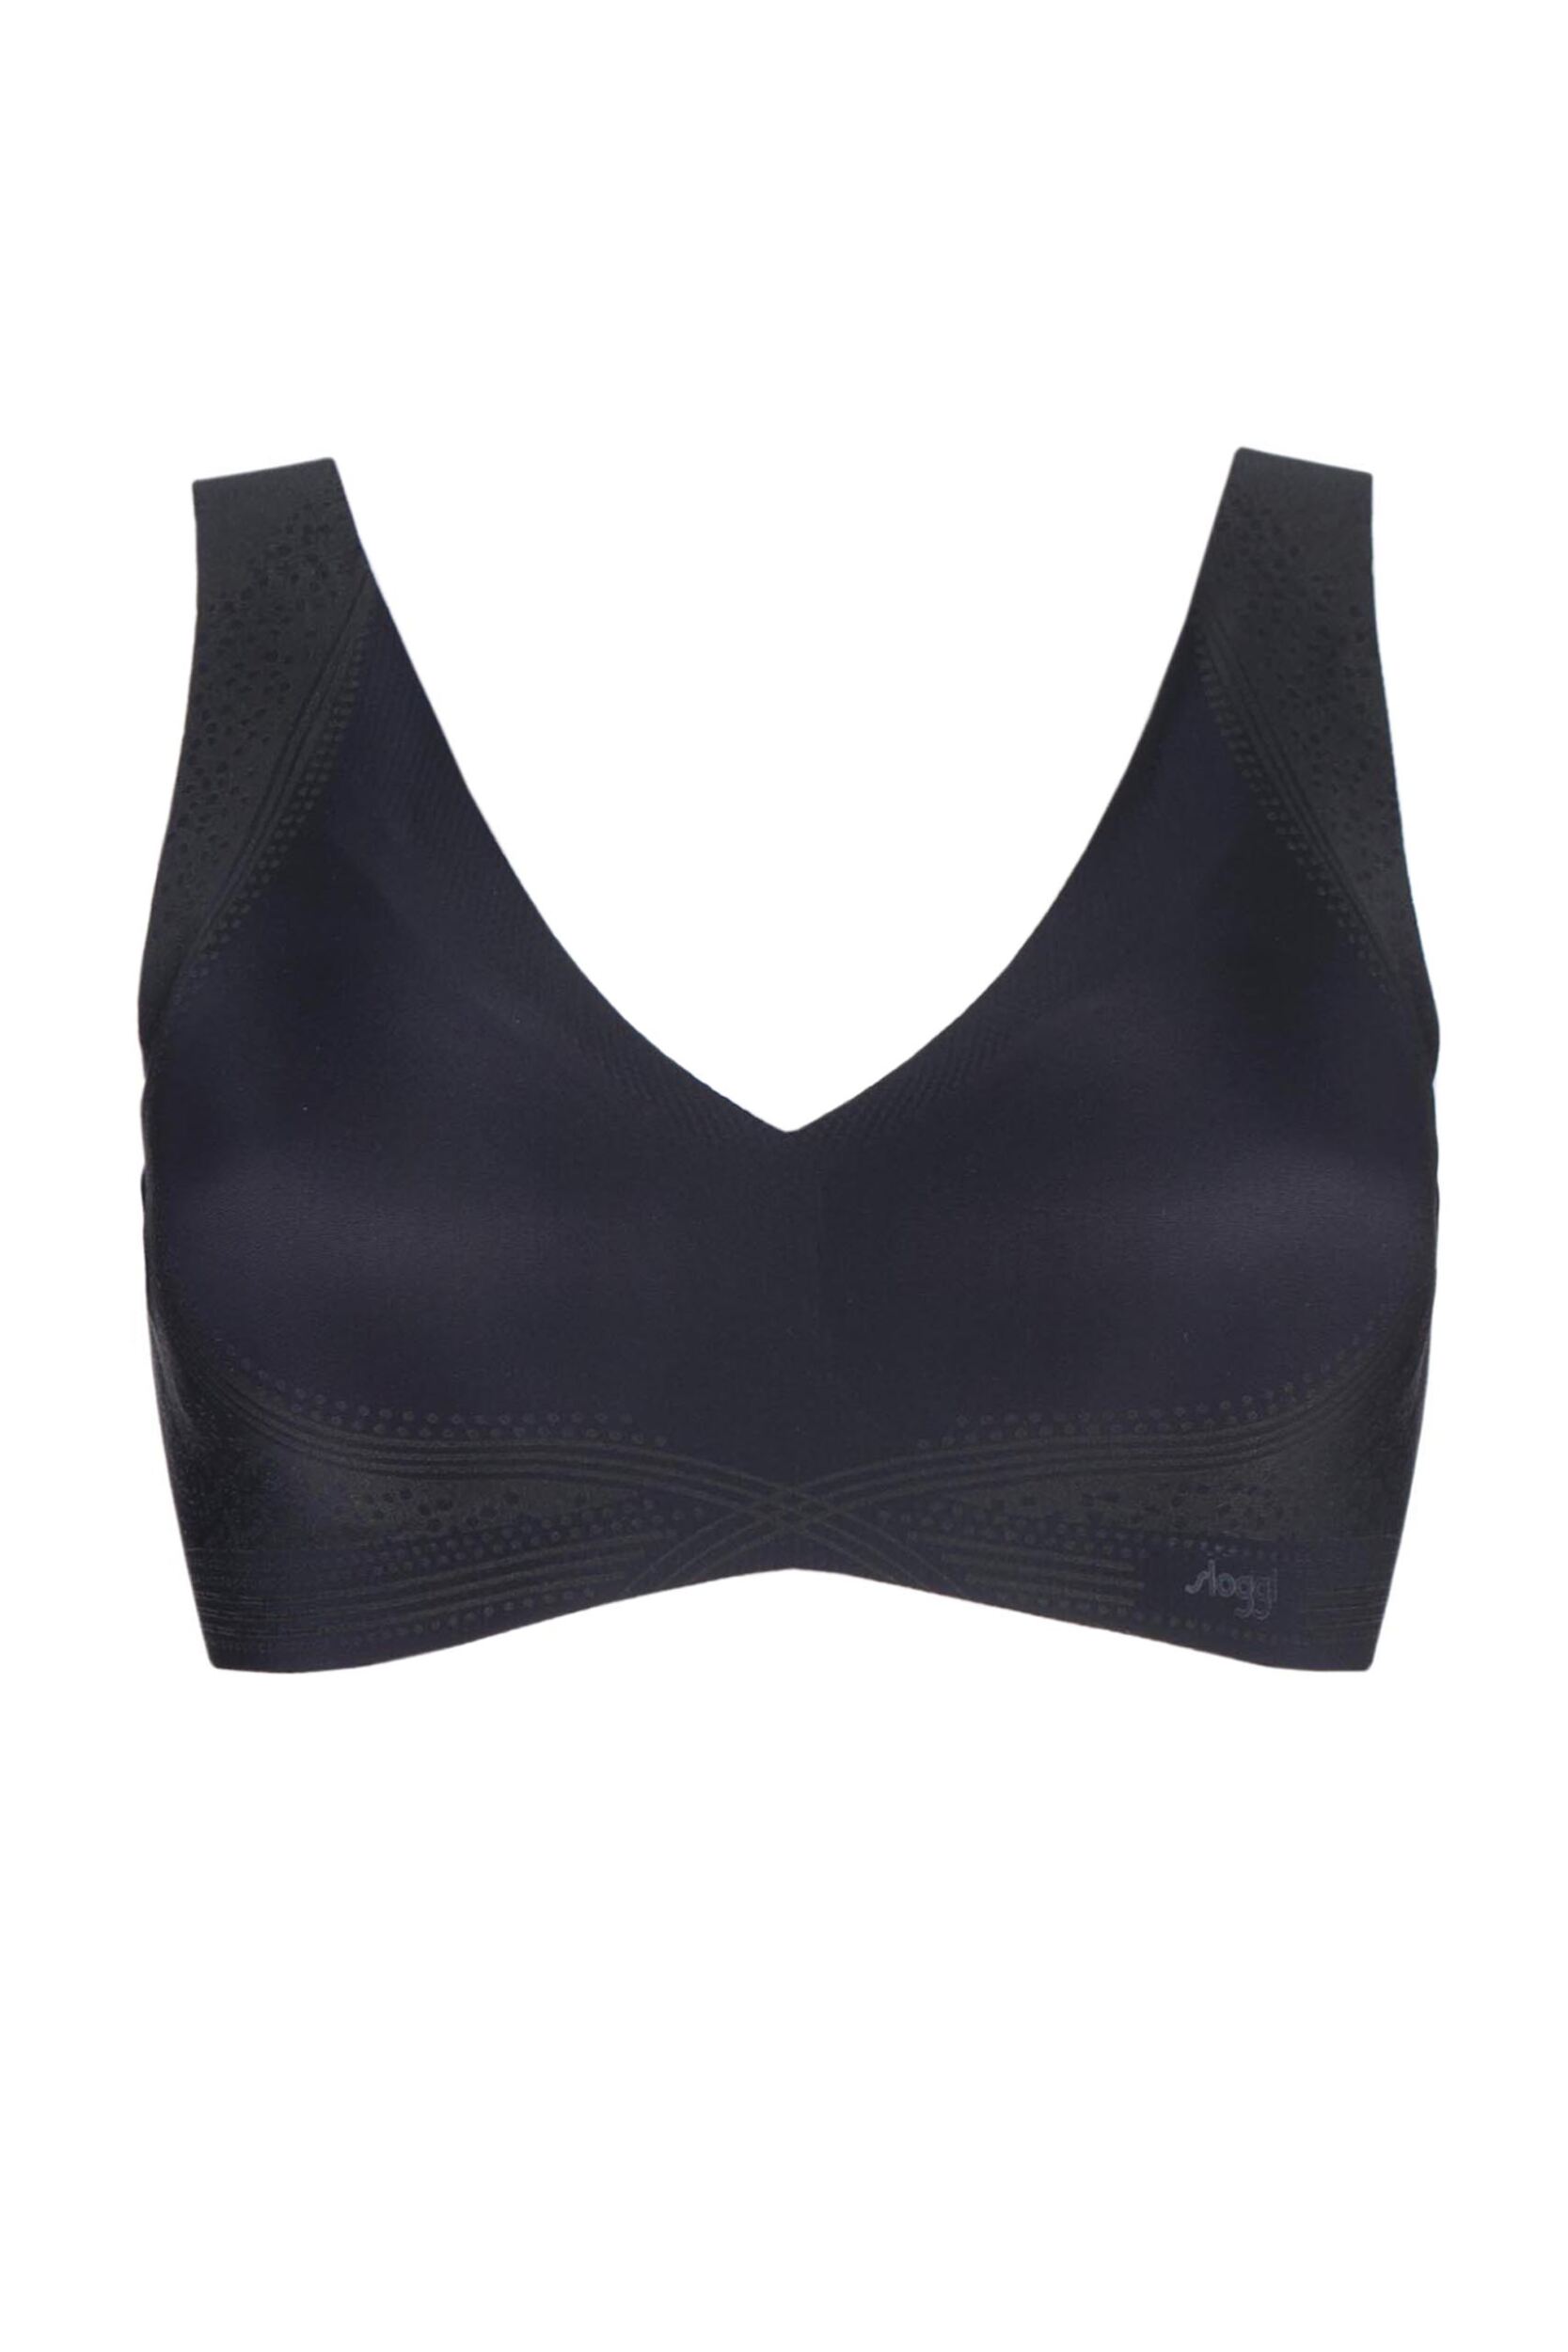 1 pack black zero feel seamfree soft bra with removable pads ladies extra large - sloggi